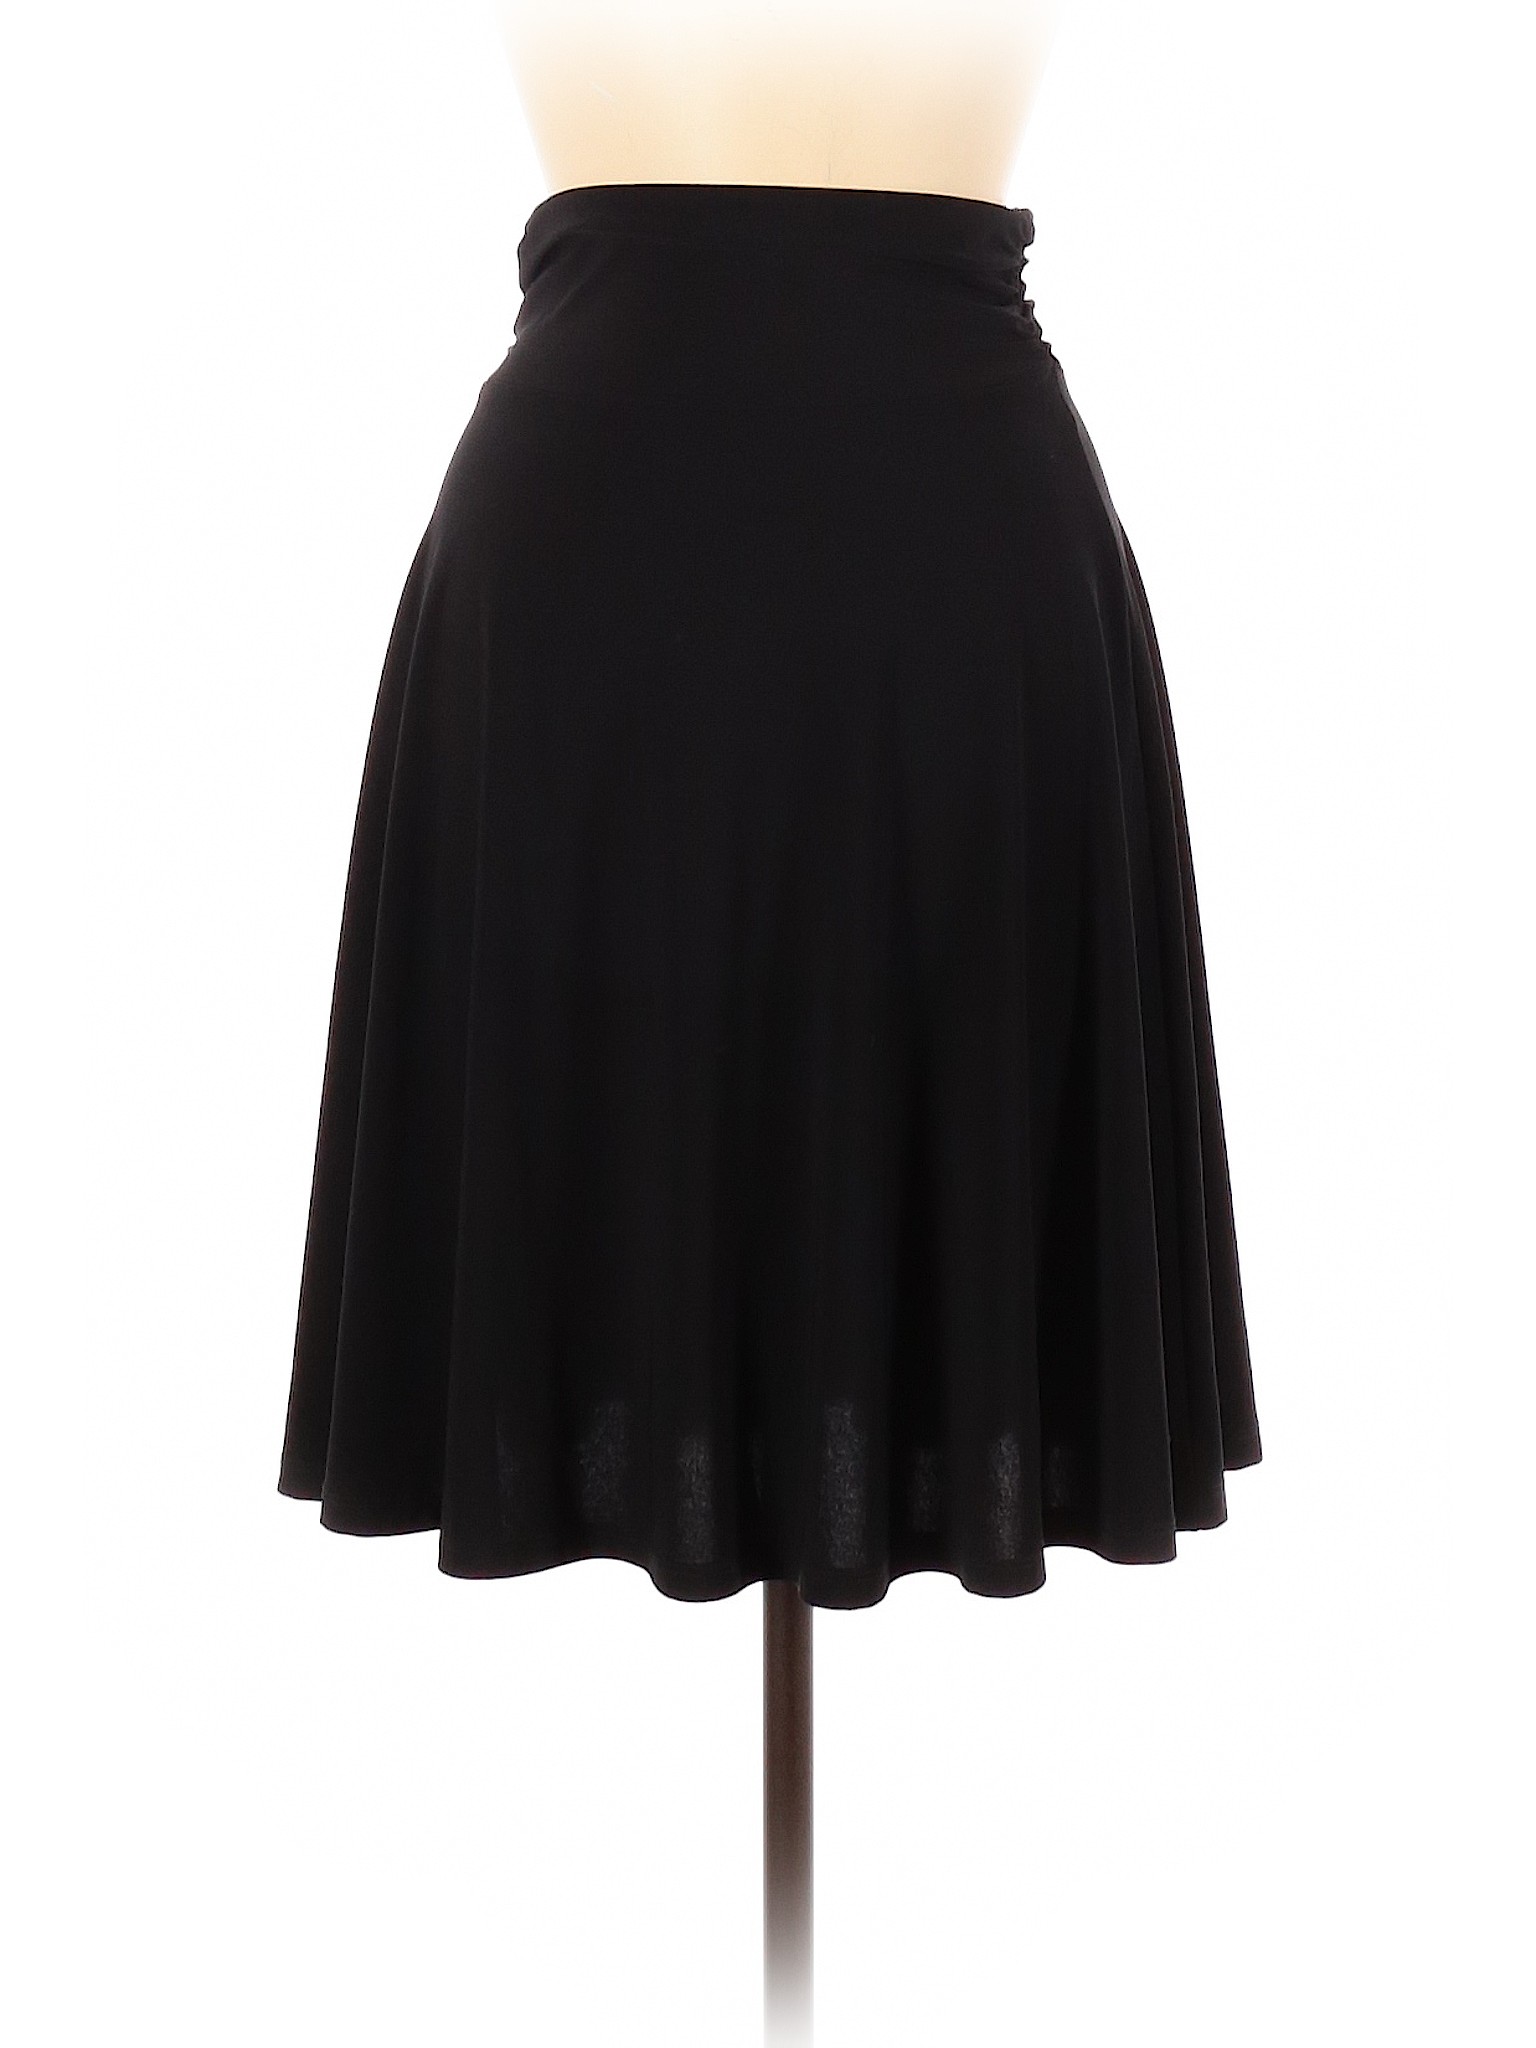 Assorted Brands Women Black Casual Skirt M | eBay